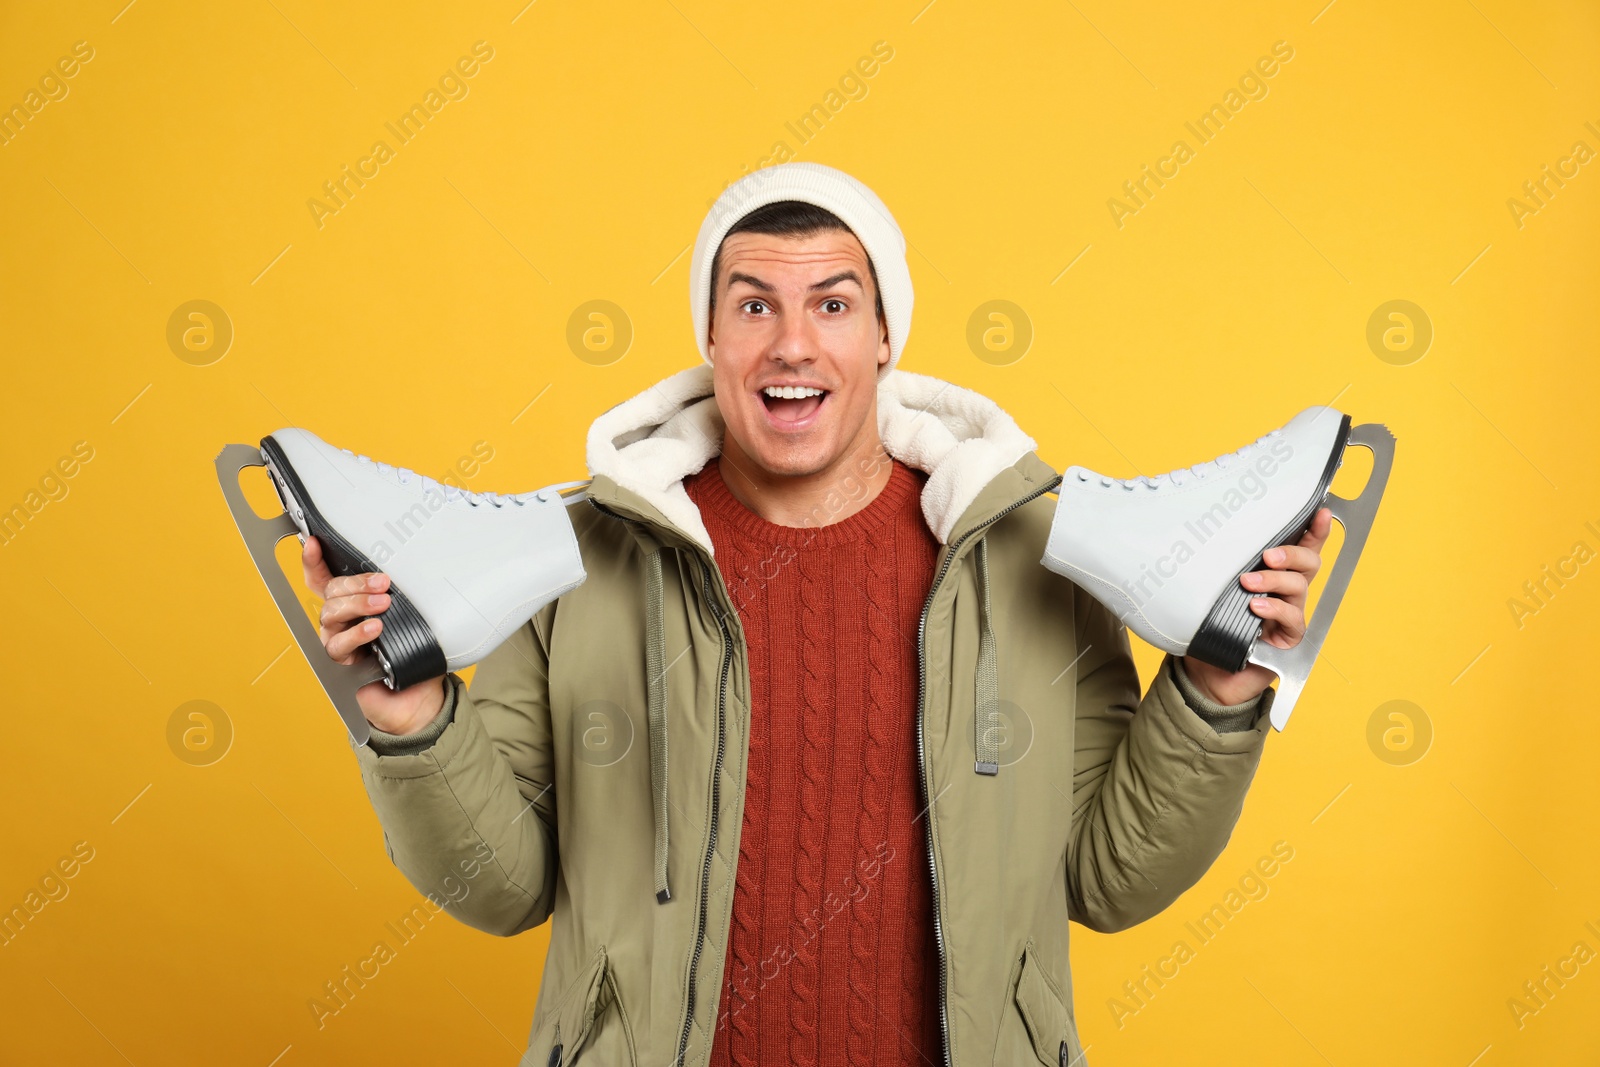 Photo of Emotional man with ice skates on yellow background